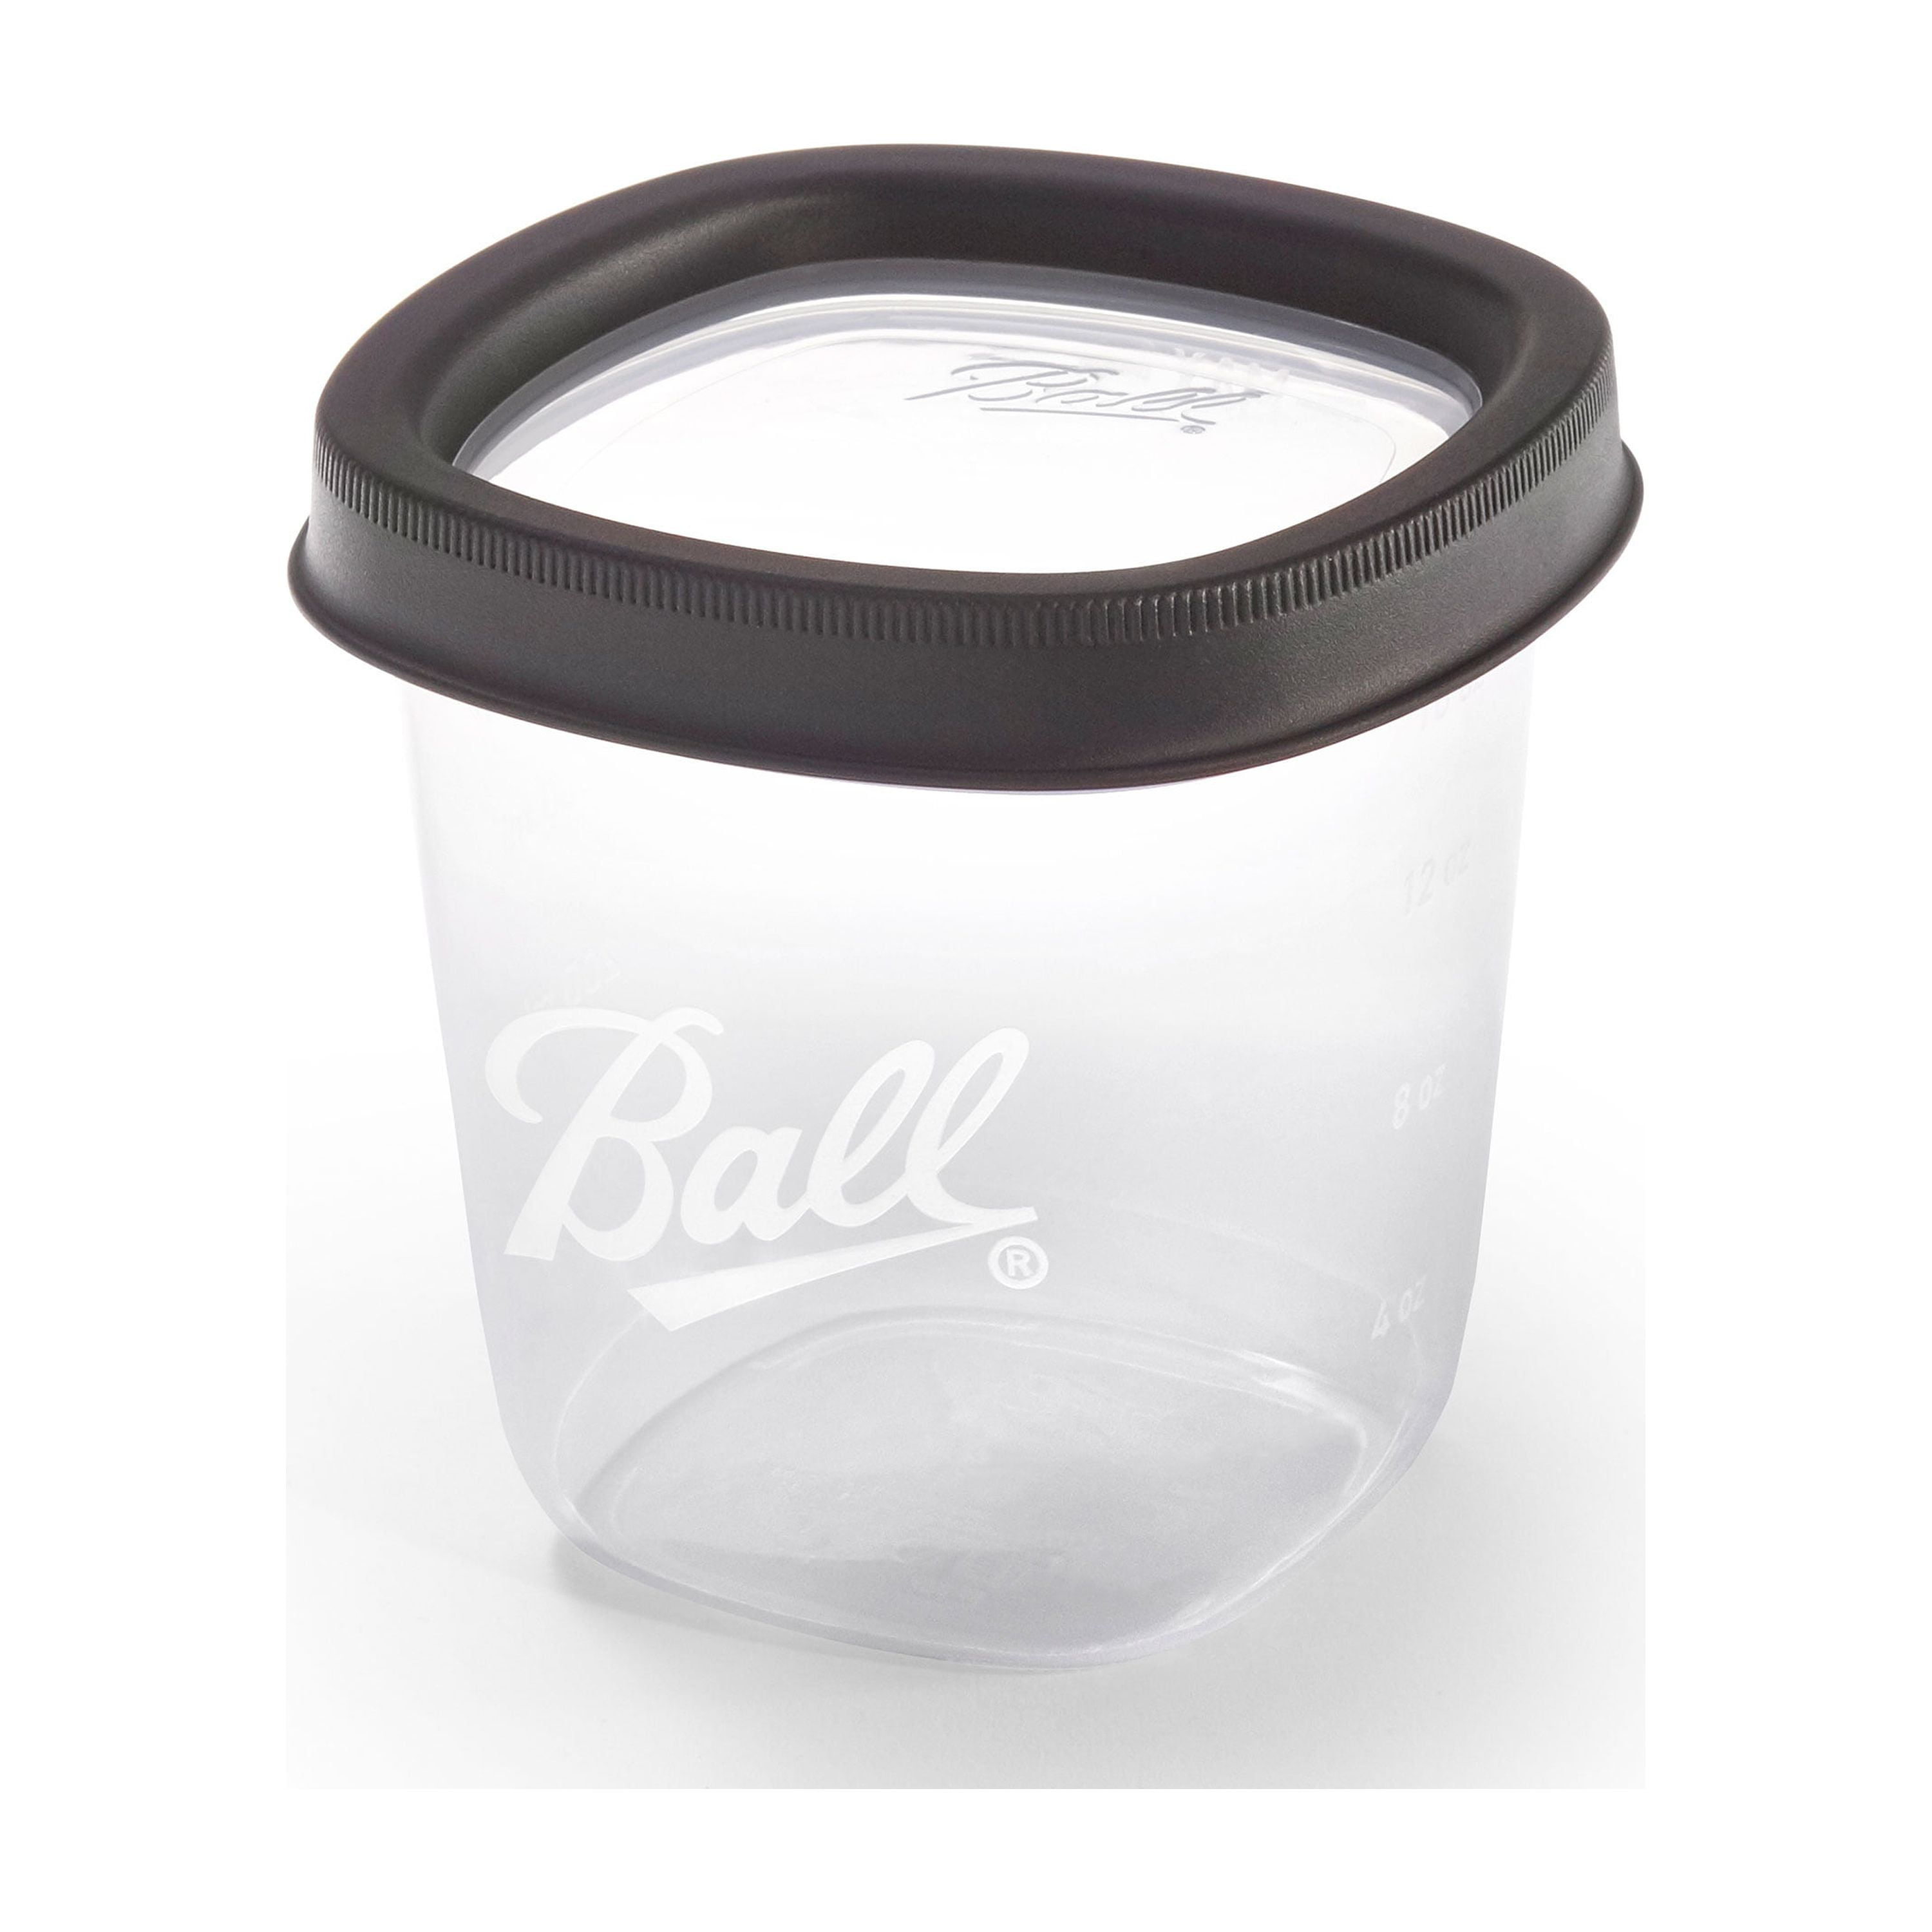 Ball Jar 8-Ounce Plastic Freezer Jar - 3 pack - Buy Right Clicking